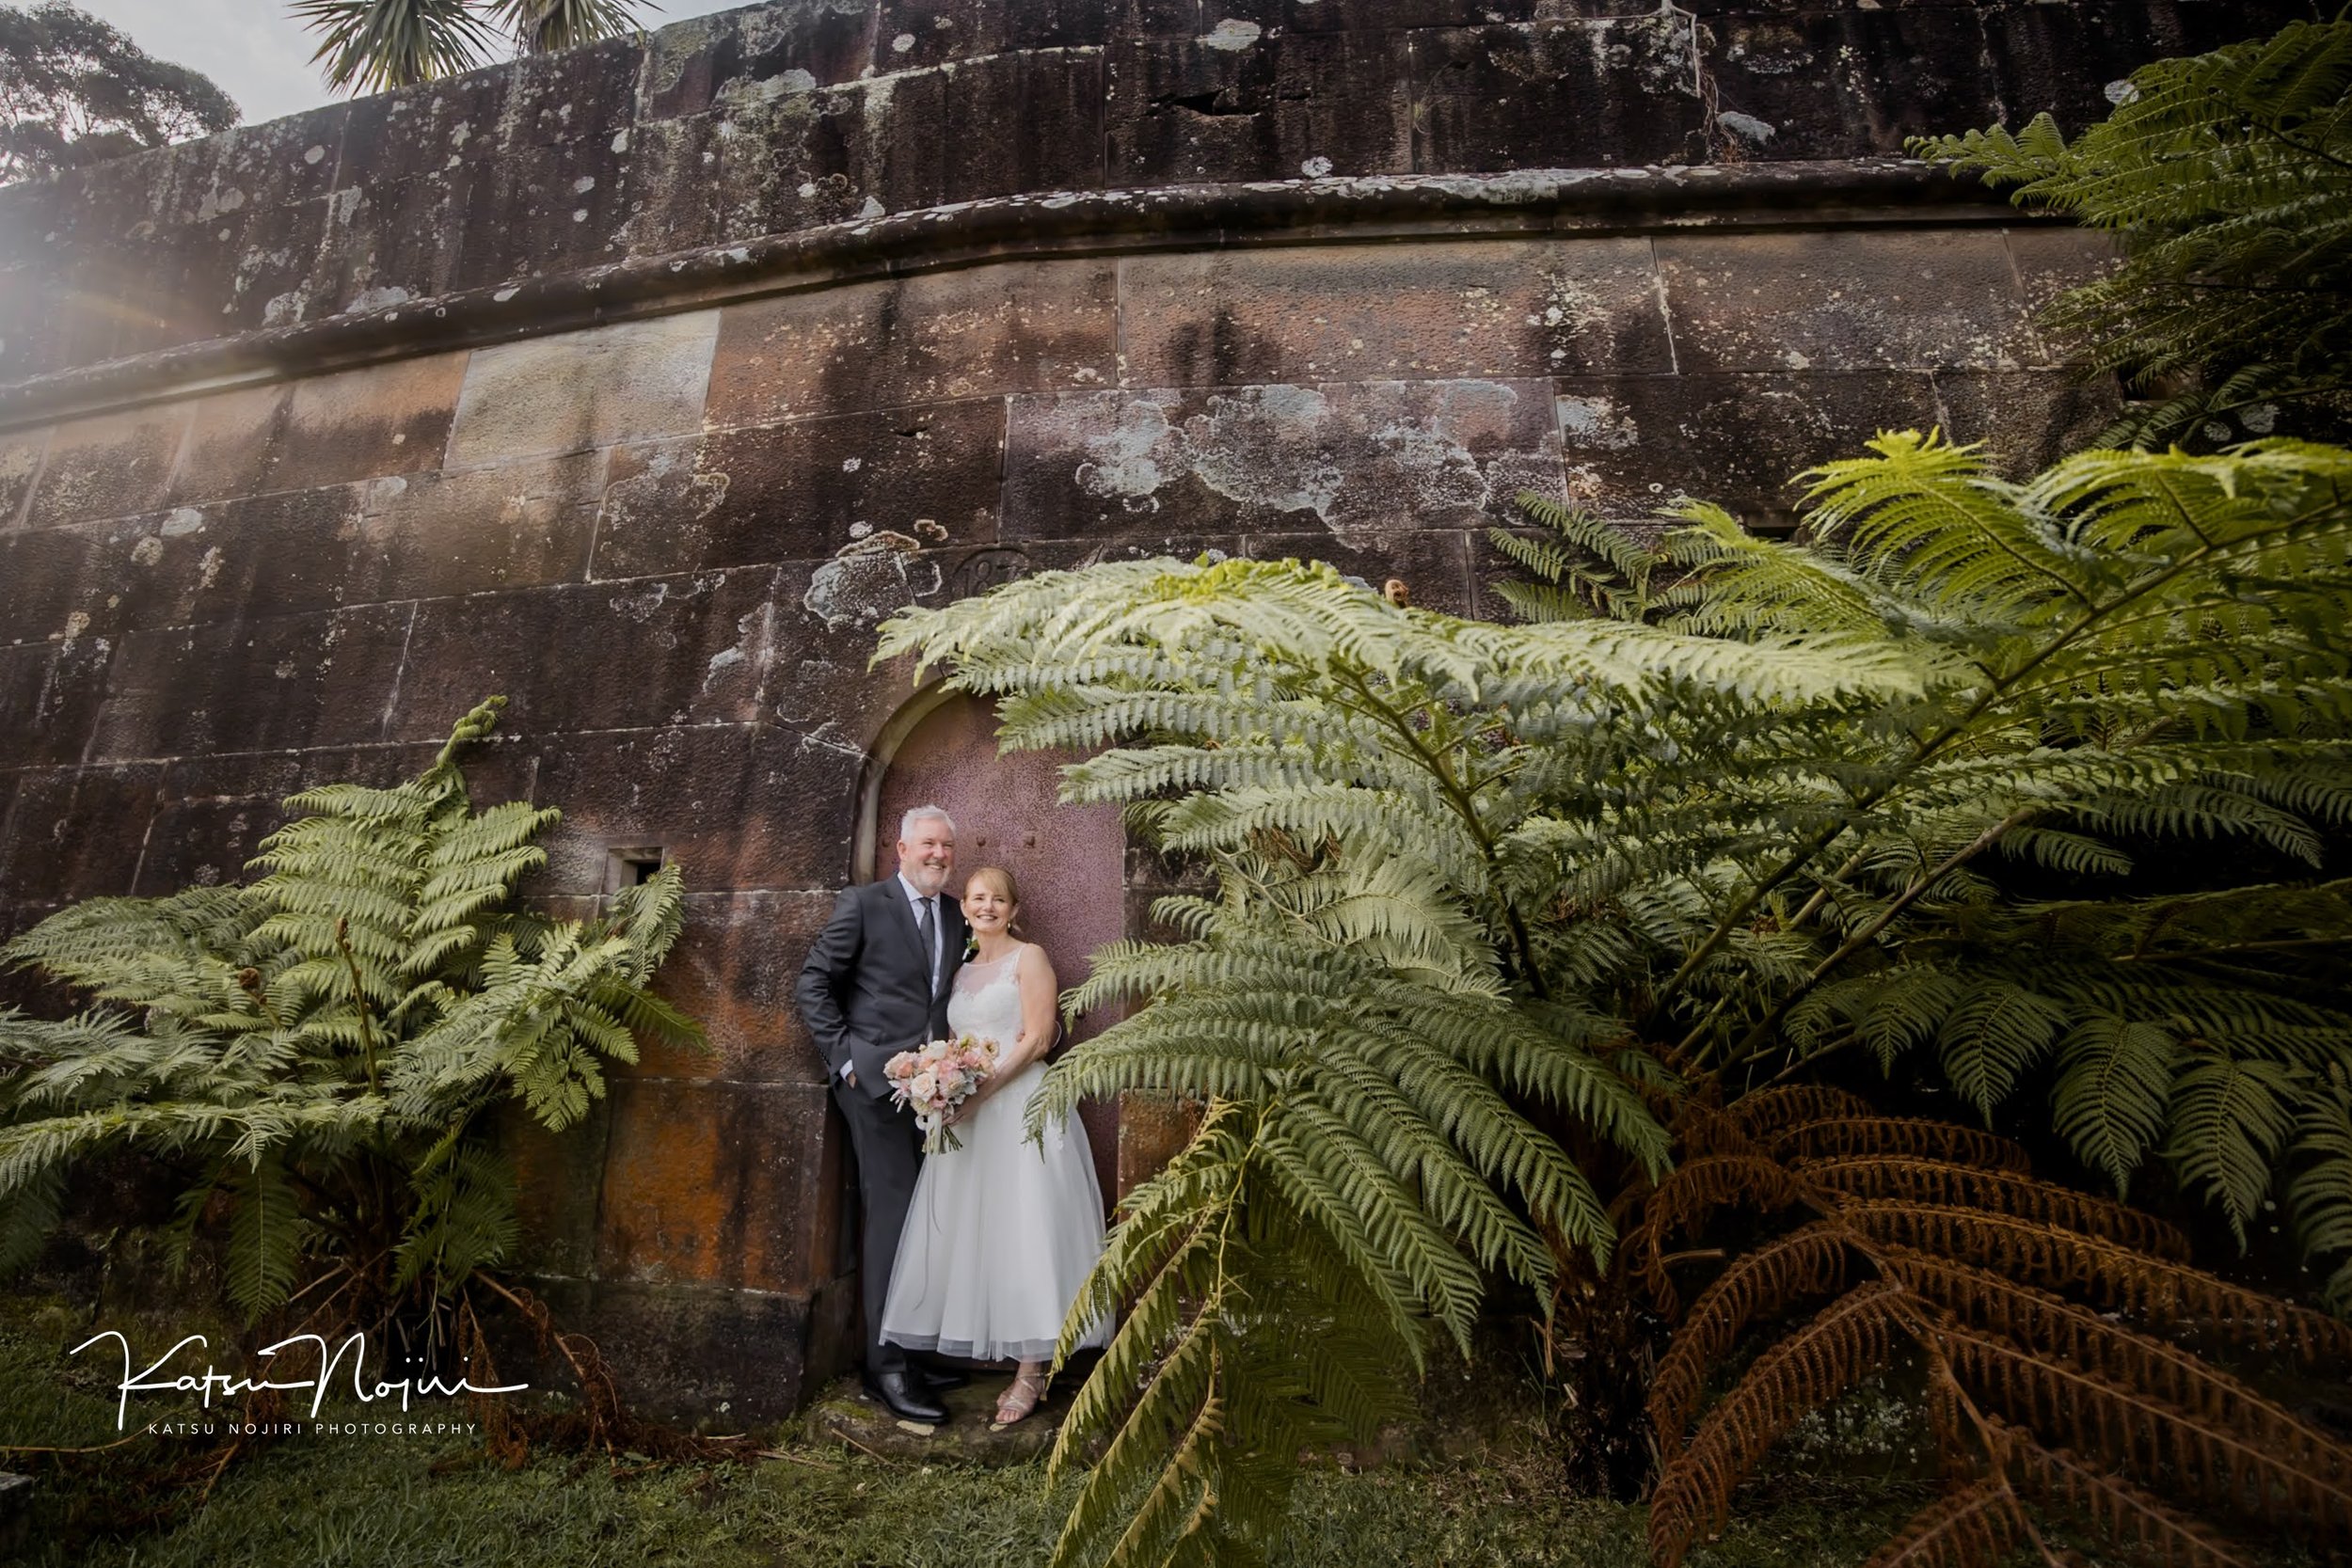 Sydney Wedding Photography by Katsu-60.jpg